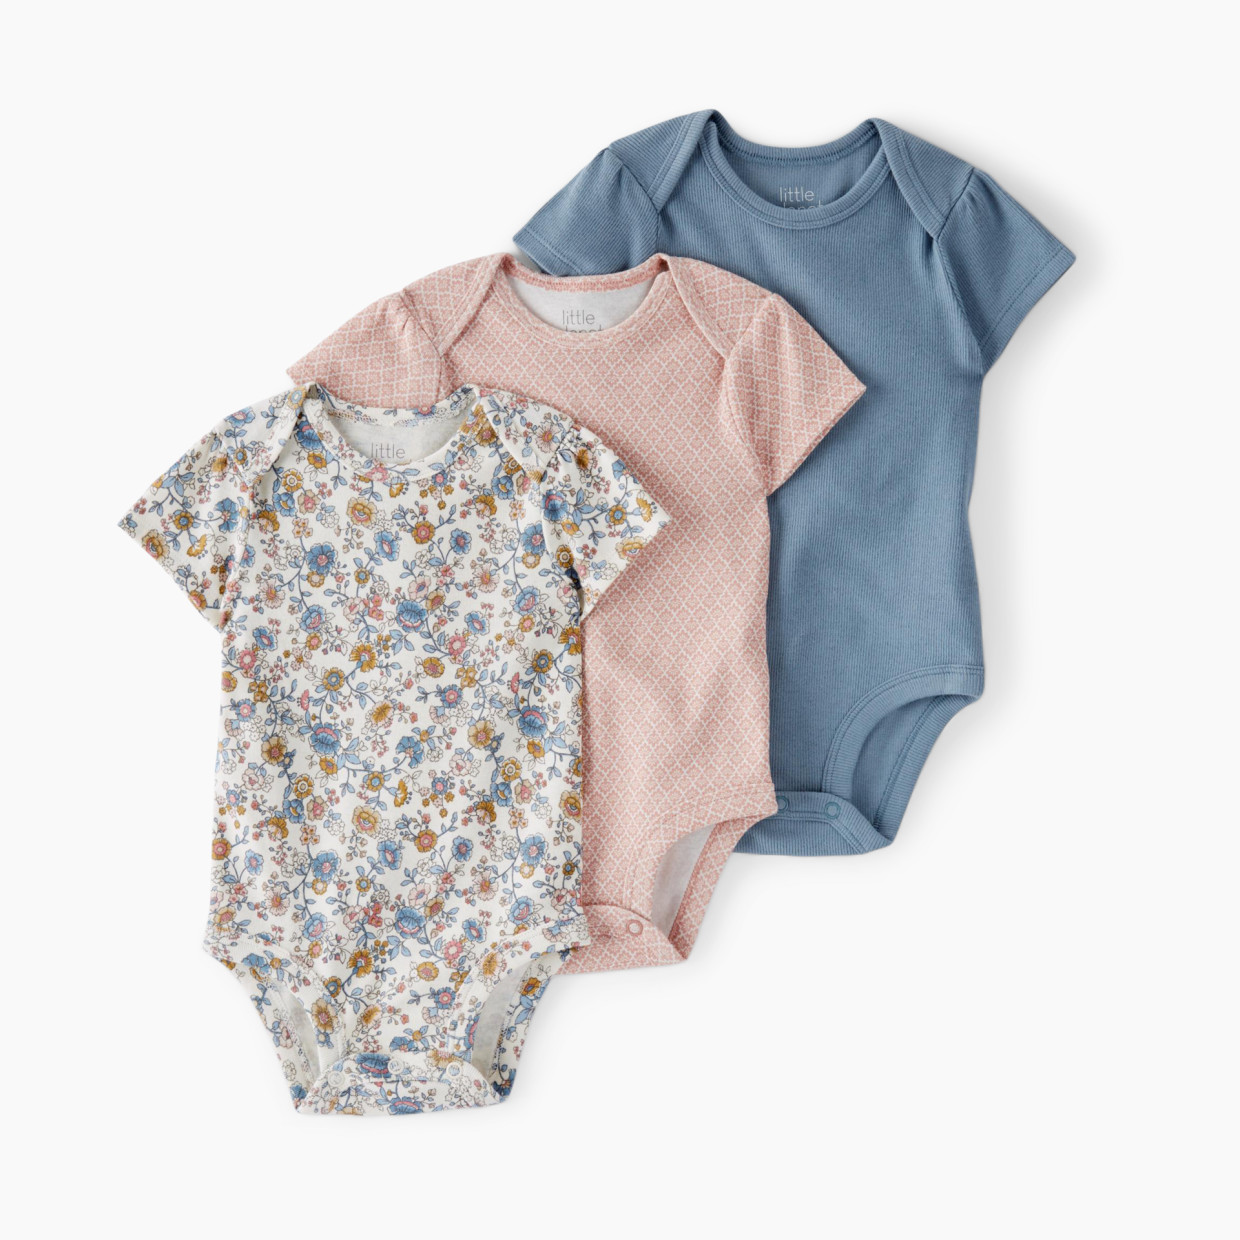 Carter's Little Planet Organic Cotton Rib Bodysuits (3 Pack) - Multi-Color Flower, Nb.